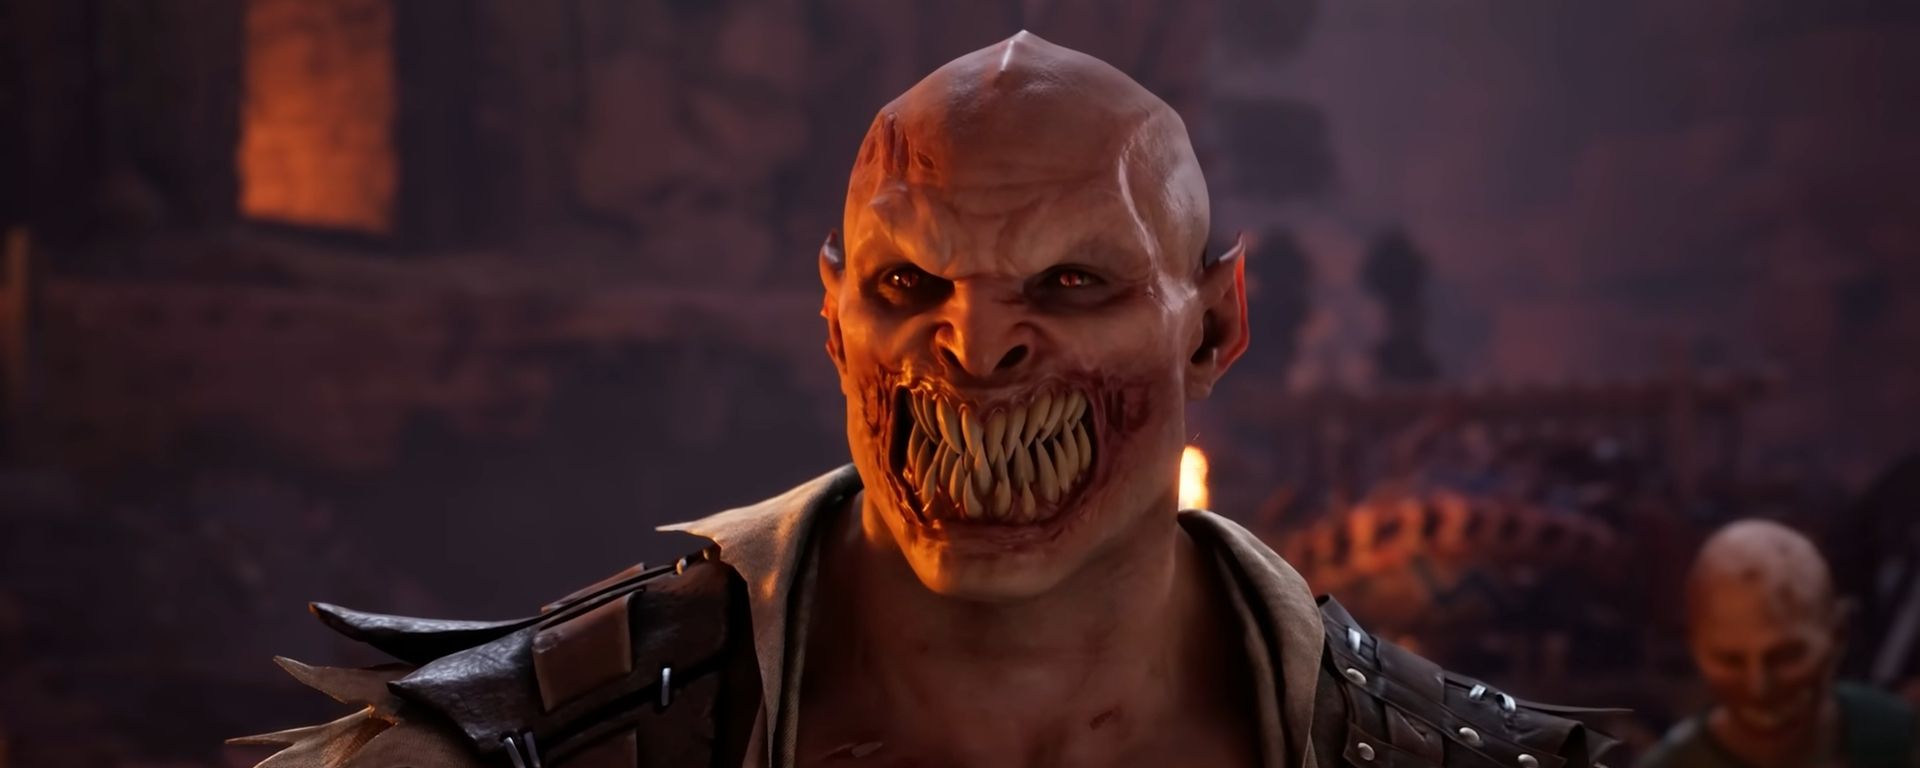 Mortal Kombat 1's Baraka shows off his teeth during a cutscene.